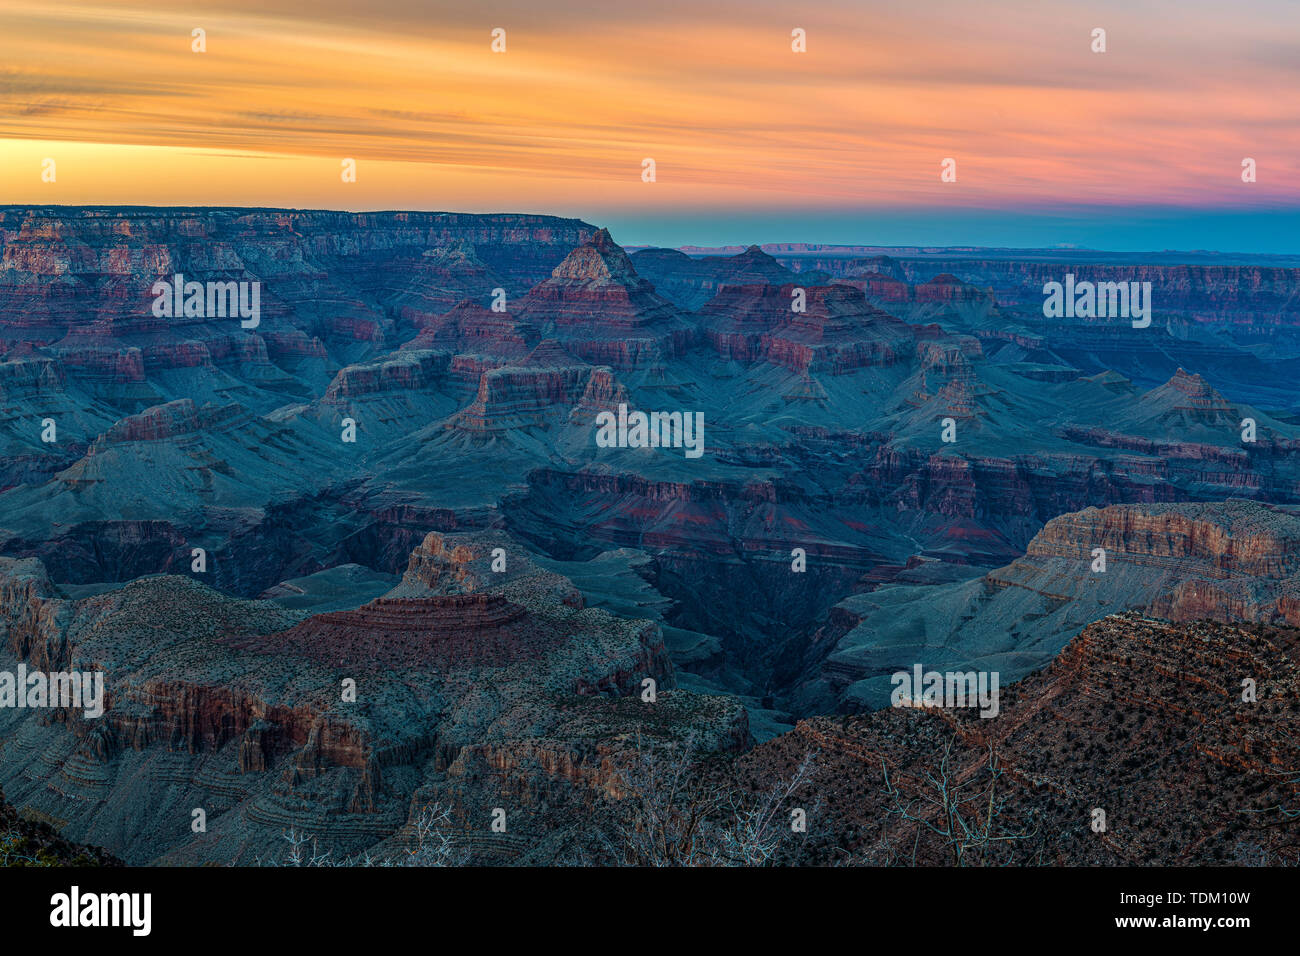 Before Night Falls on the Canyon, Grand Canyon National Park, Arizona Stock Photo